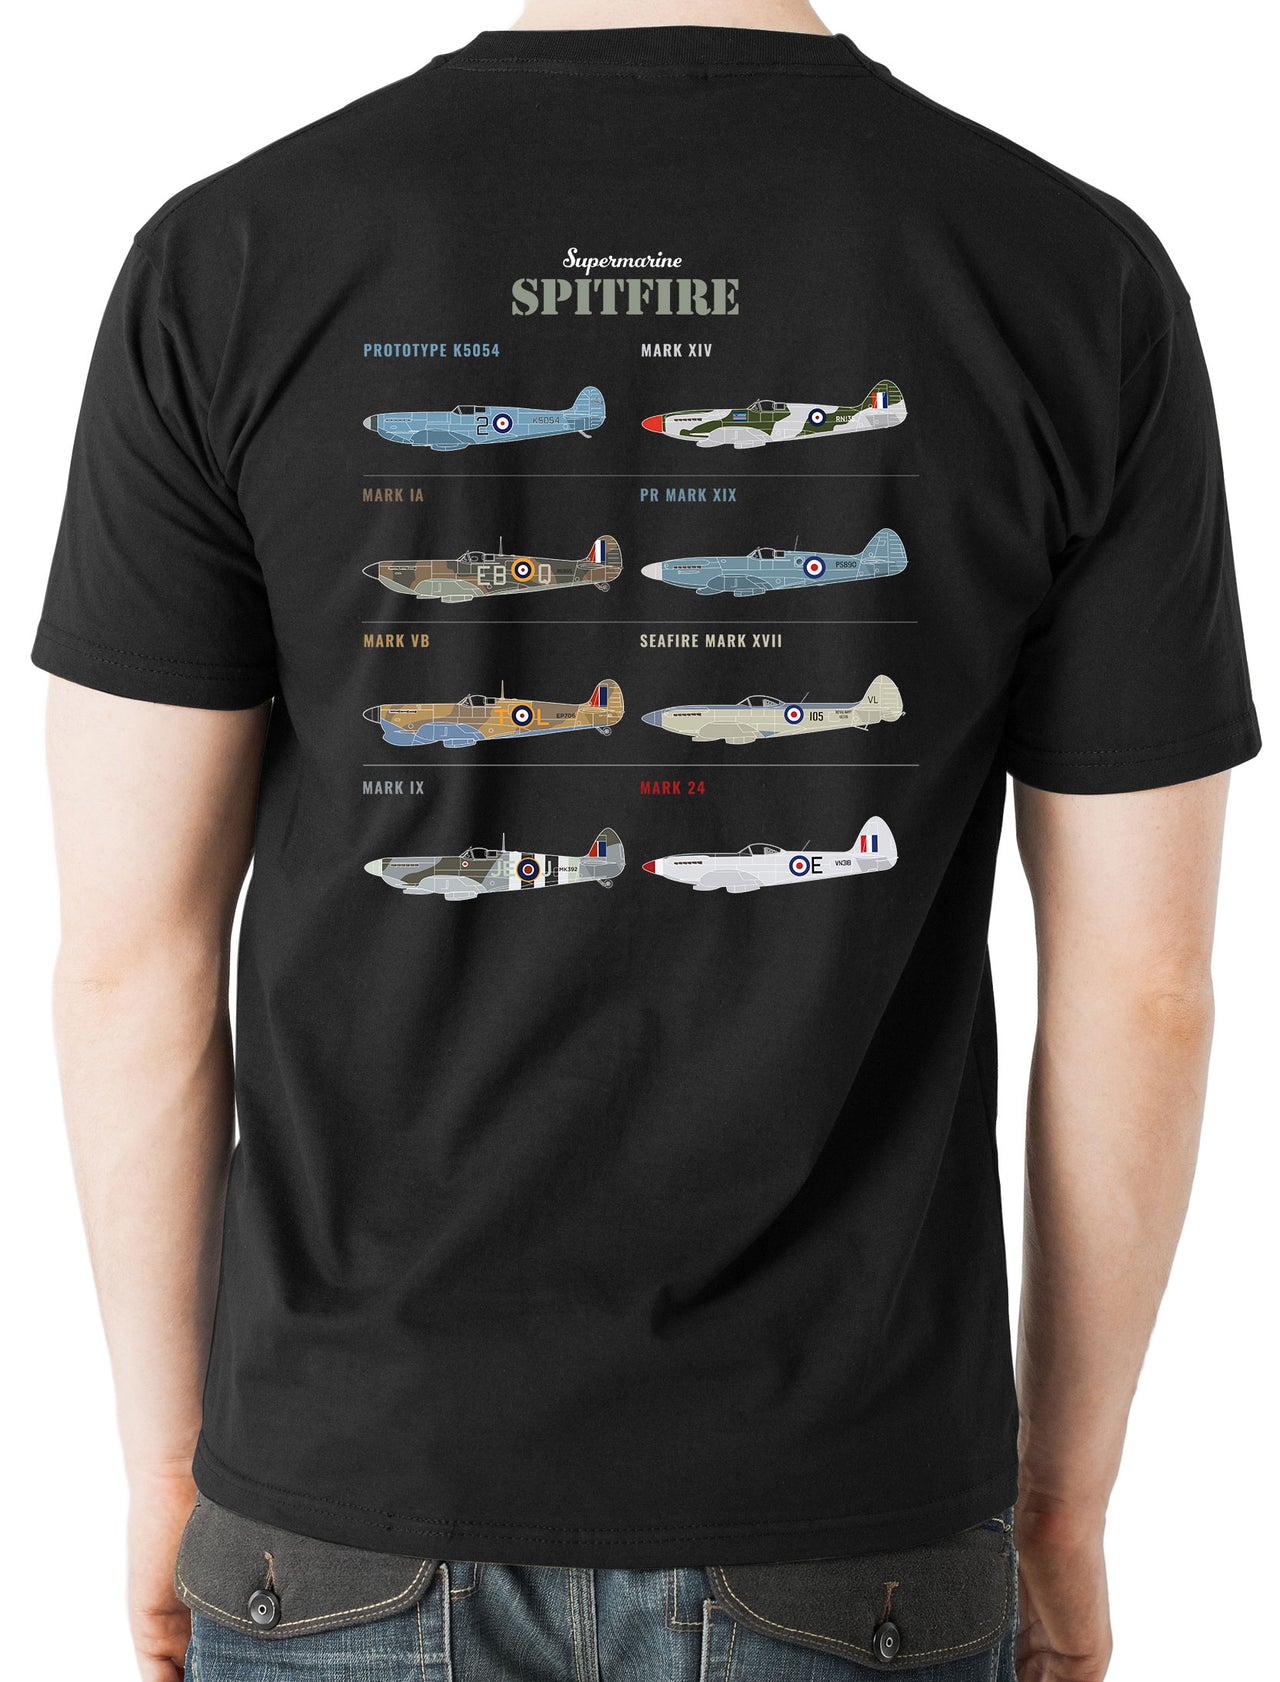 Seafire MK XVII - T-shirt